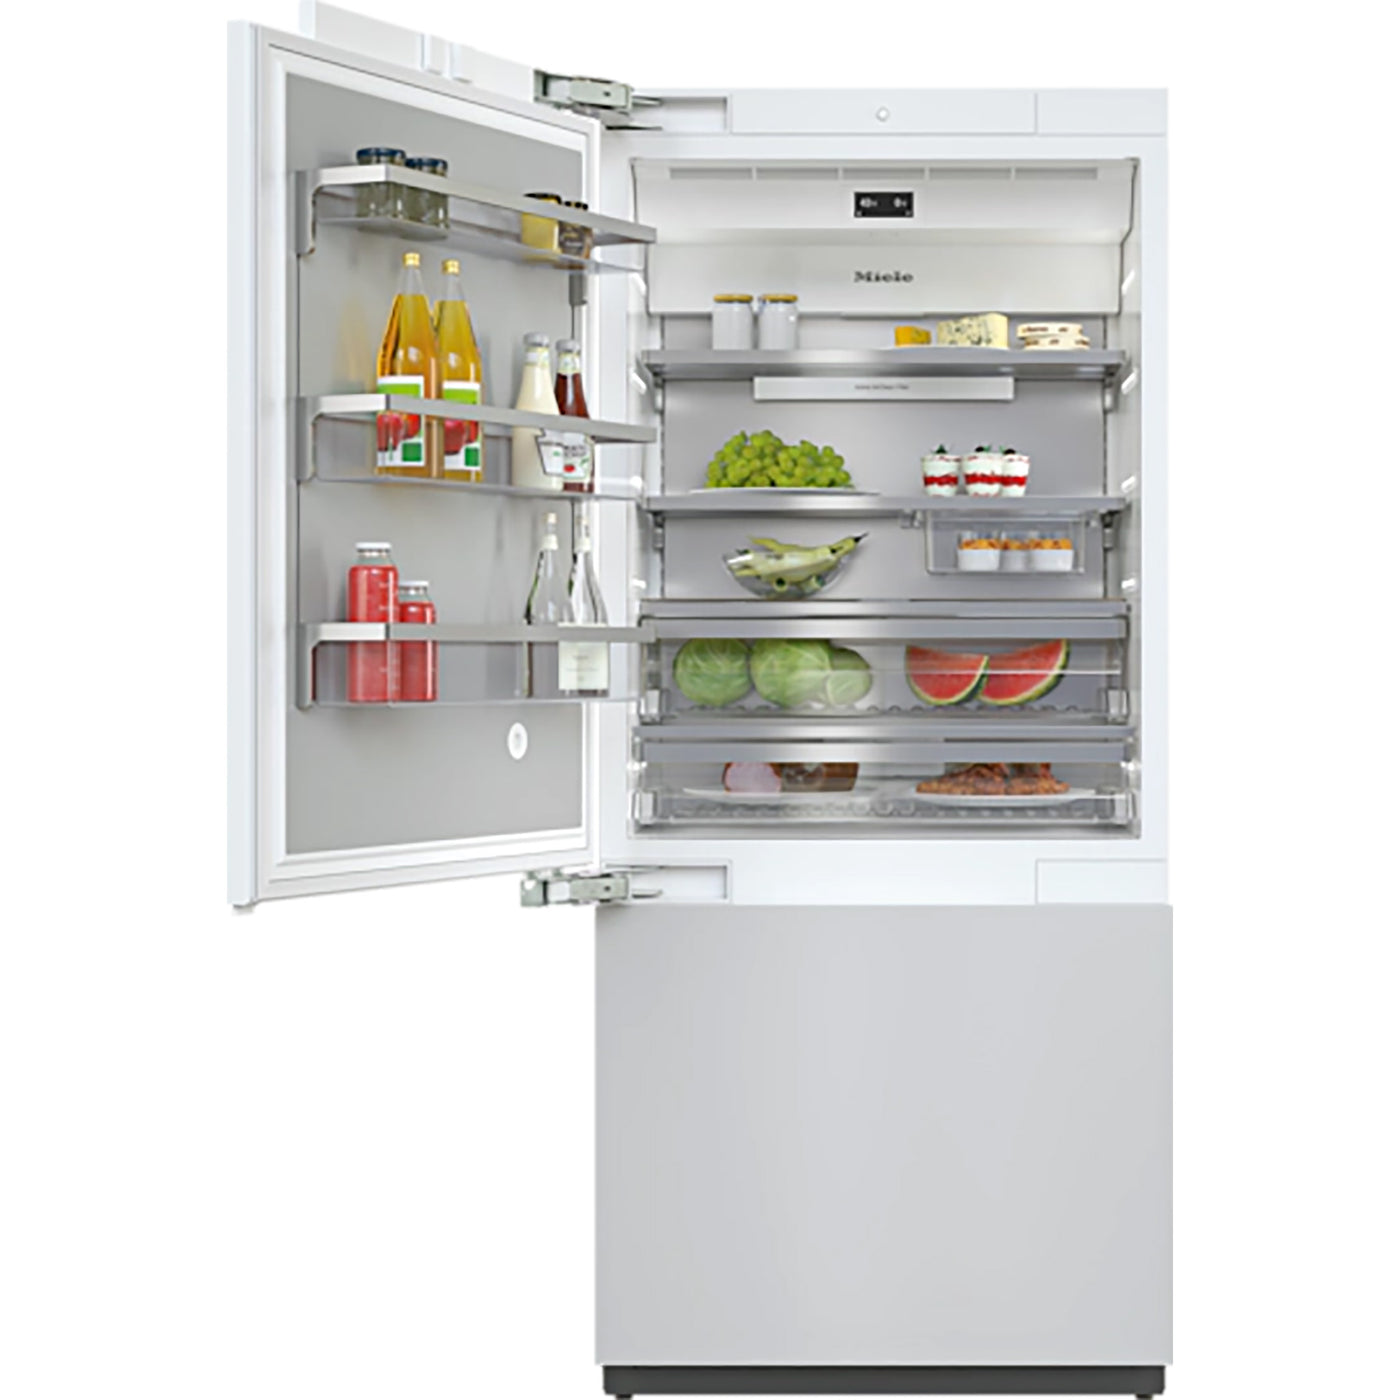 Miele-refrigerator-KF 2912 Vi